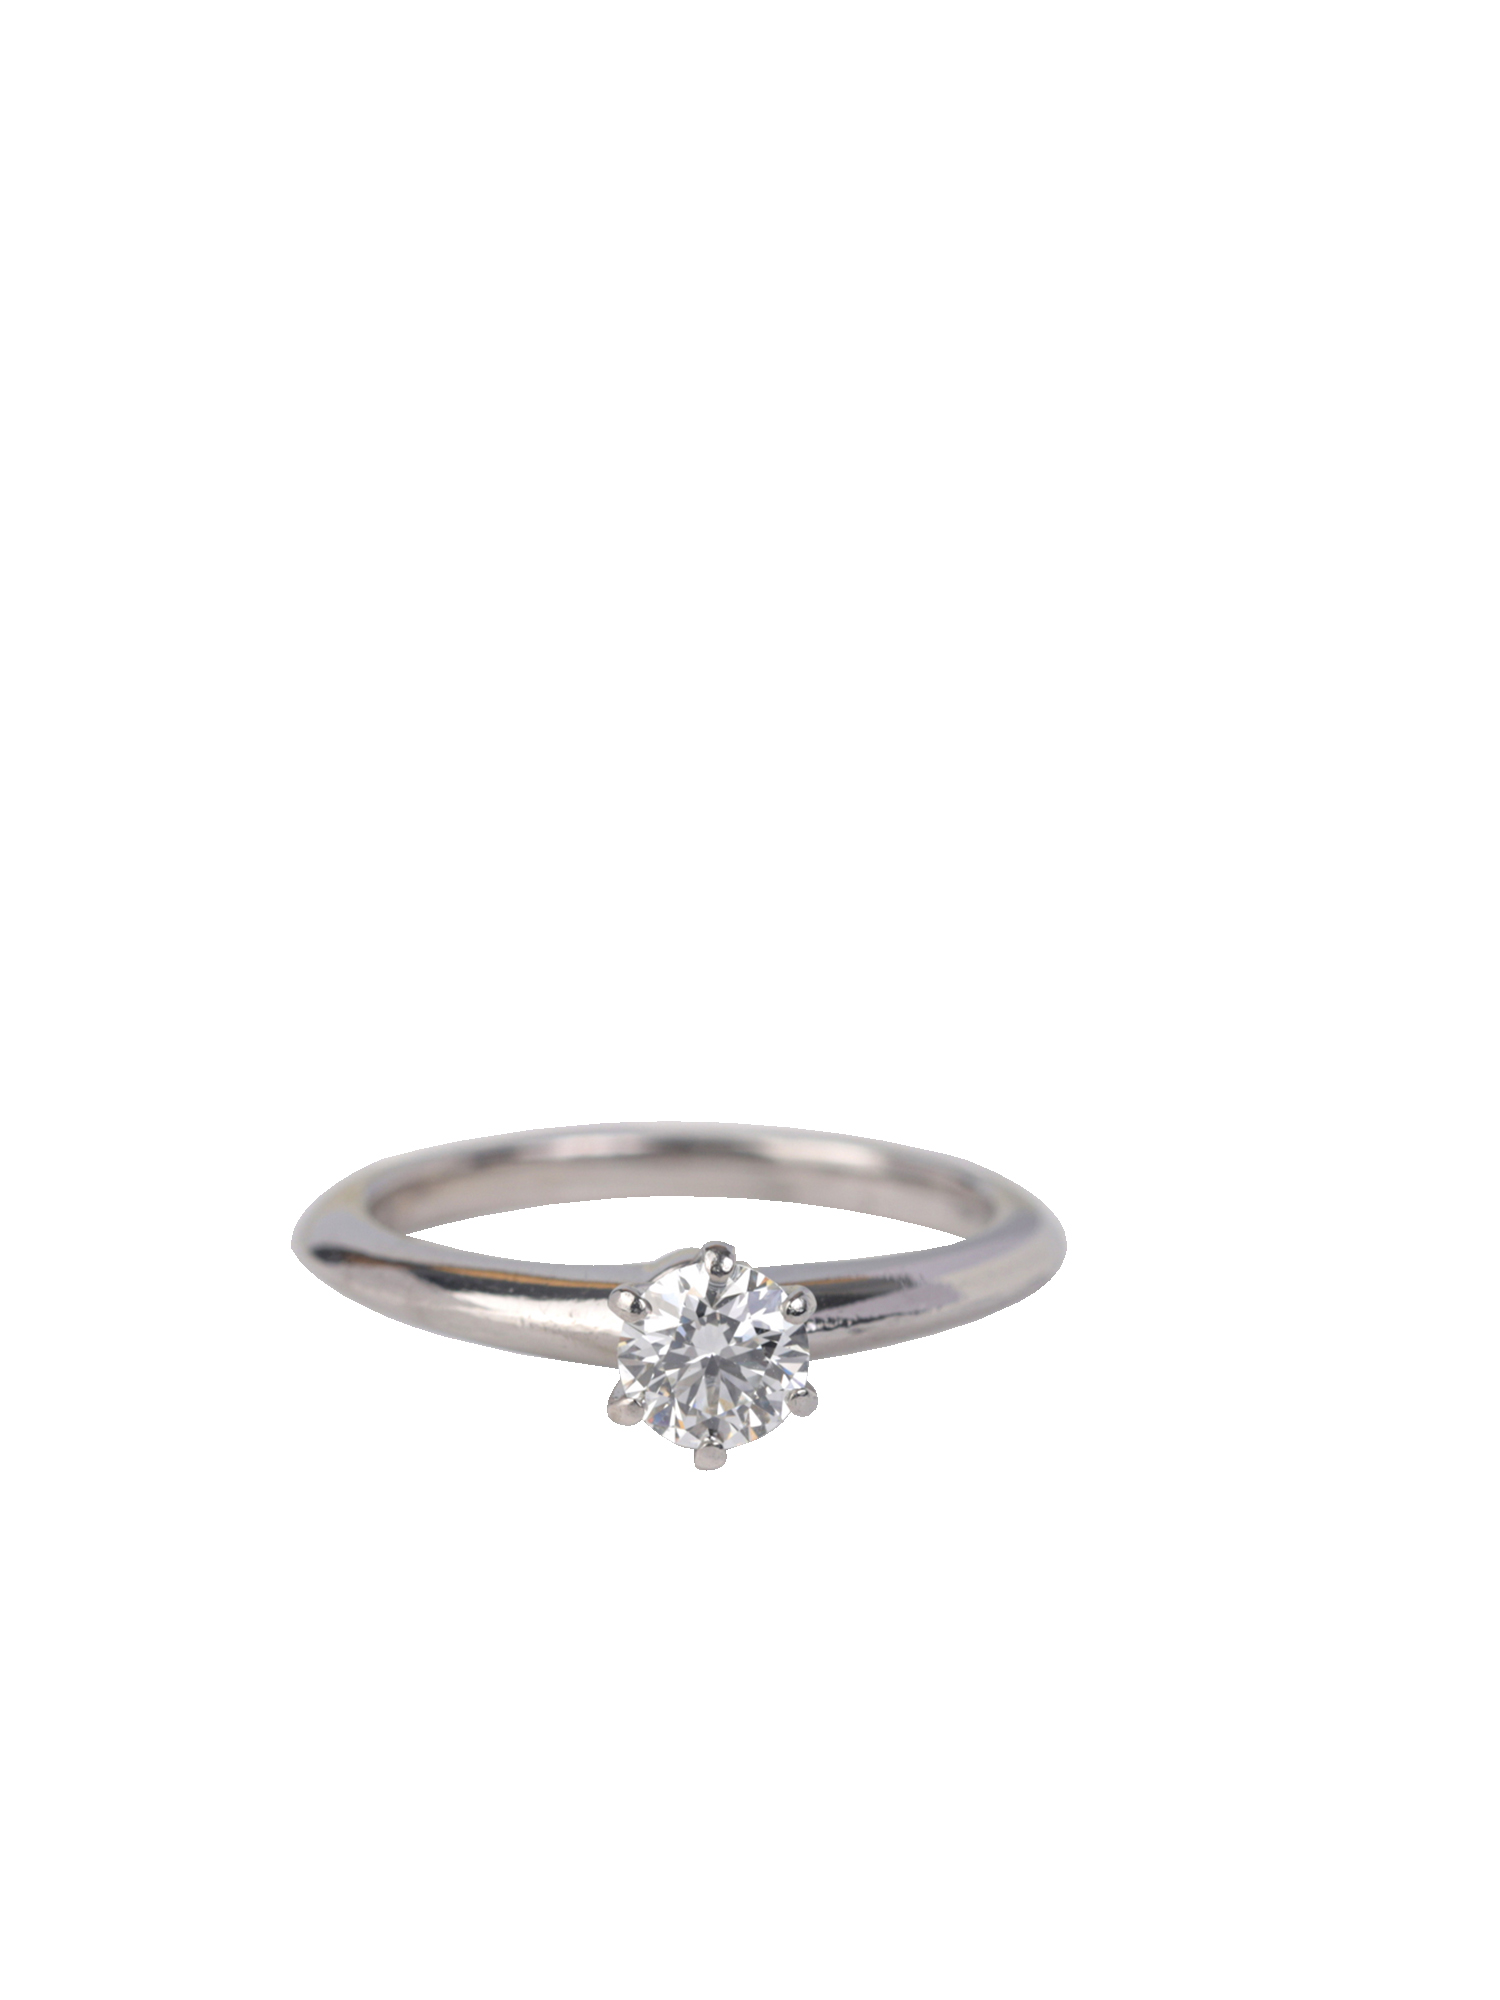 https://image.katexoxo.com/uploads/images/kxo_20230220144340te51l. The Tiffany Setting Engagement Ring in Platinum 950 Size 49Artboard 2